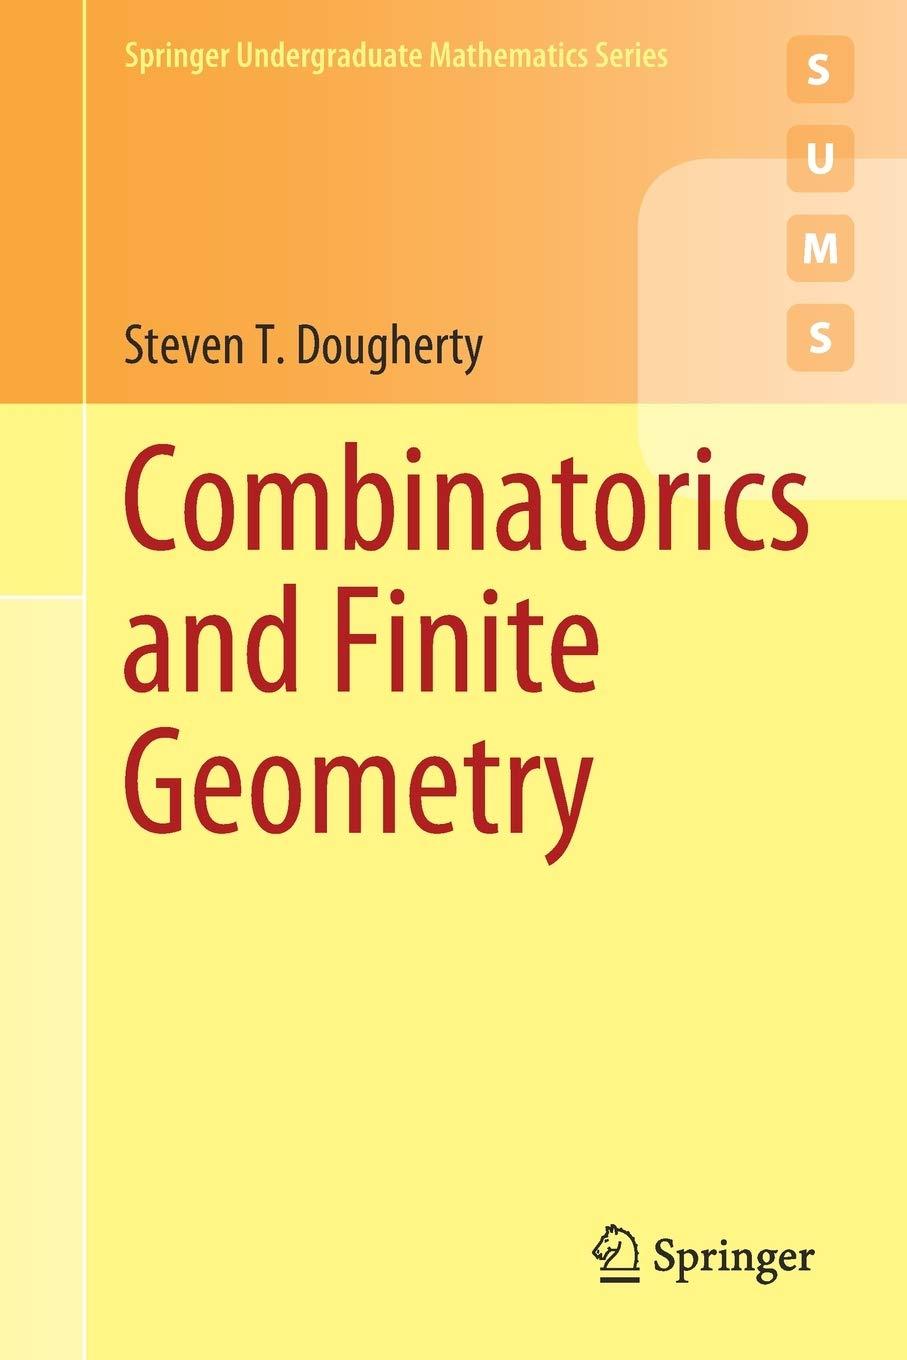 combinatorics and finite geometry springer undergraduate mathematics series 1st edition steven t. dougherty